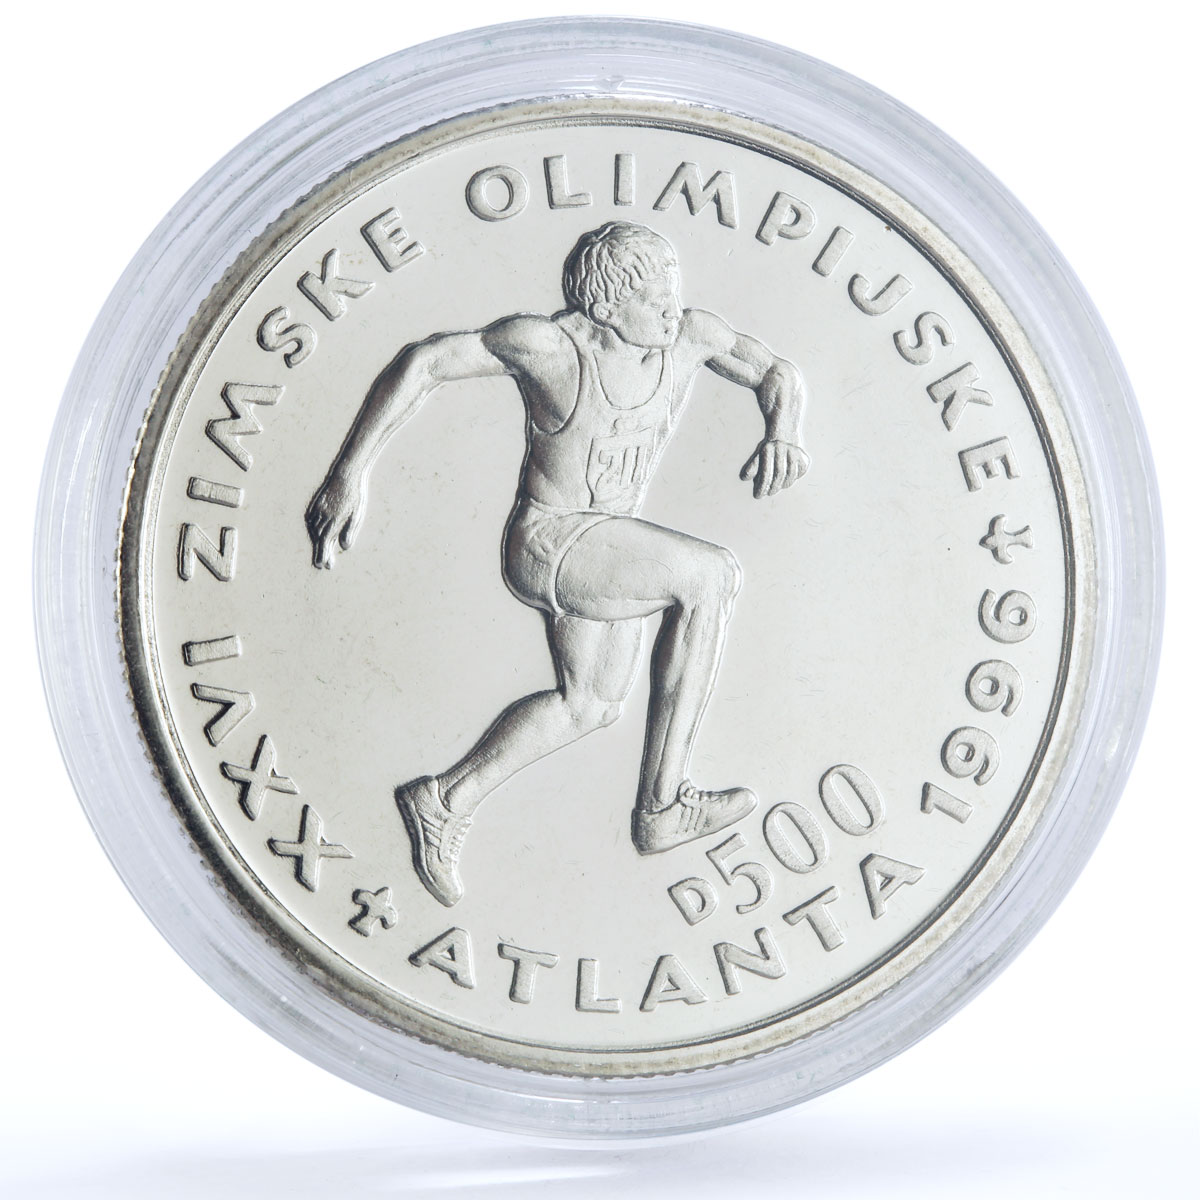 Bosnia and Herzegovina set of 4 coins Atlanta Olympic Games CuNi coins 1996